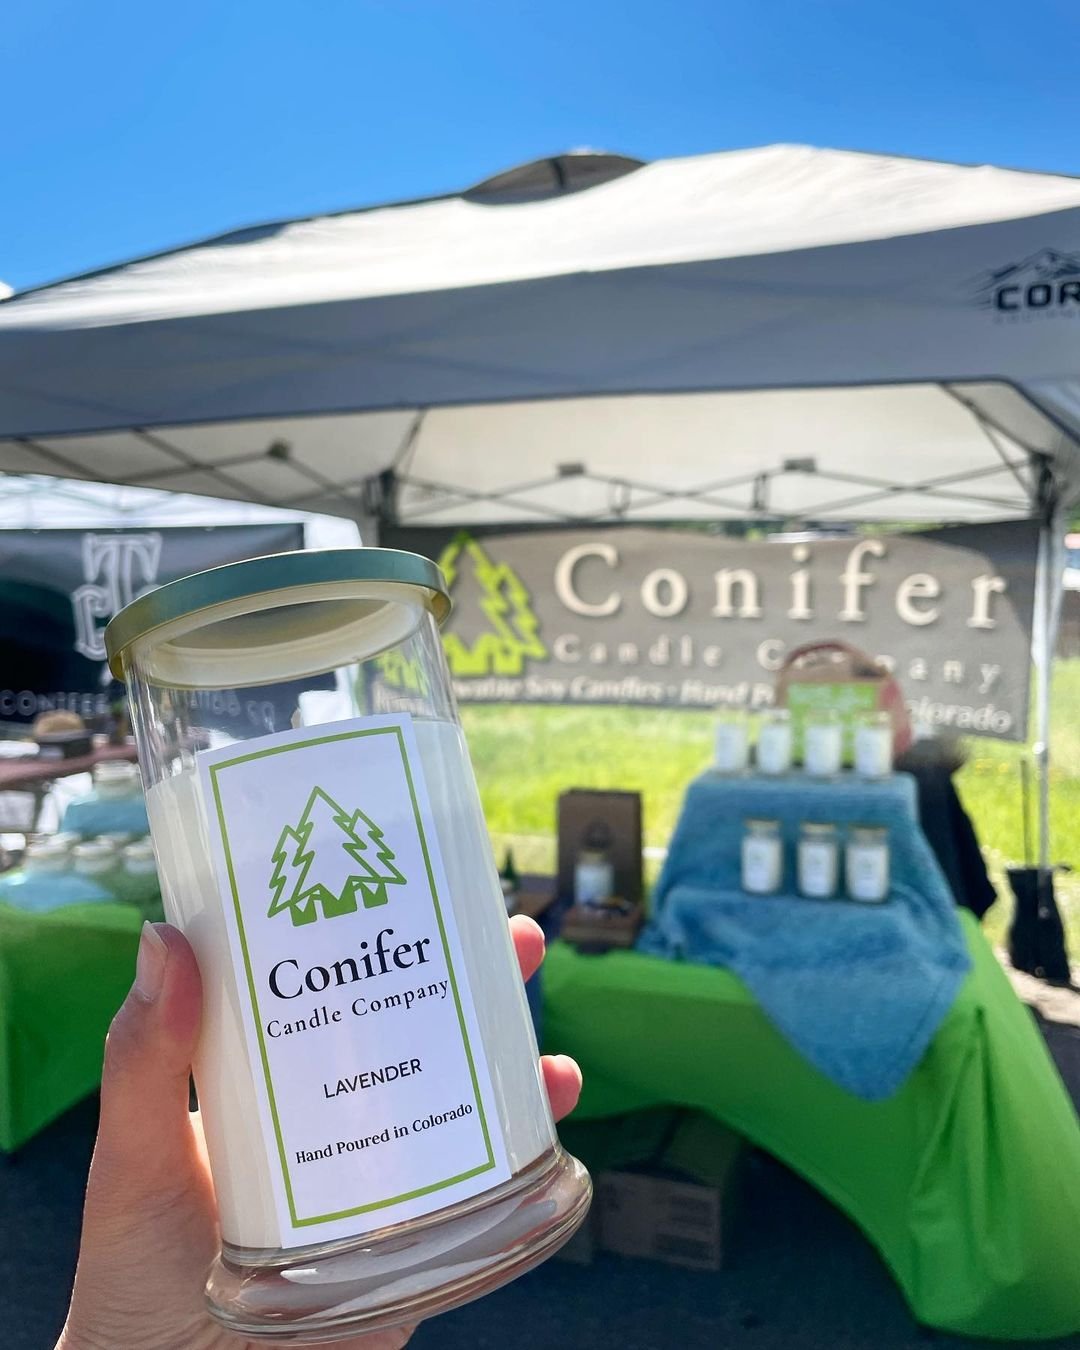 Conifer Candle Company